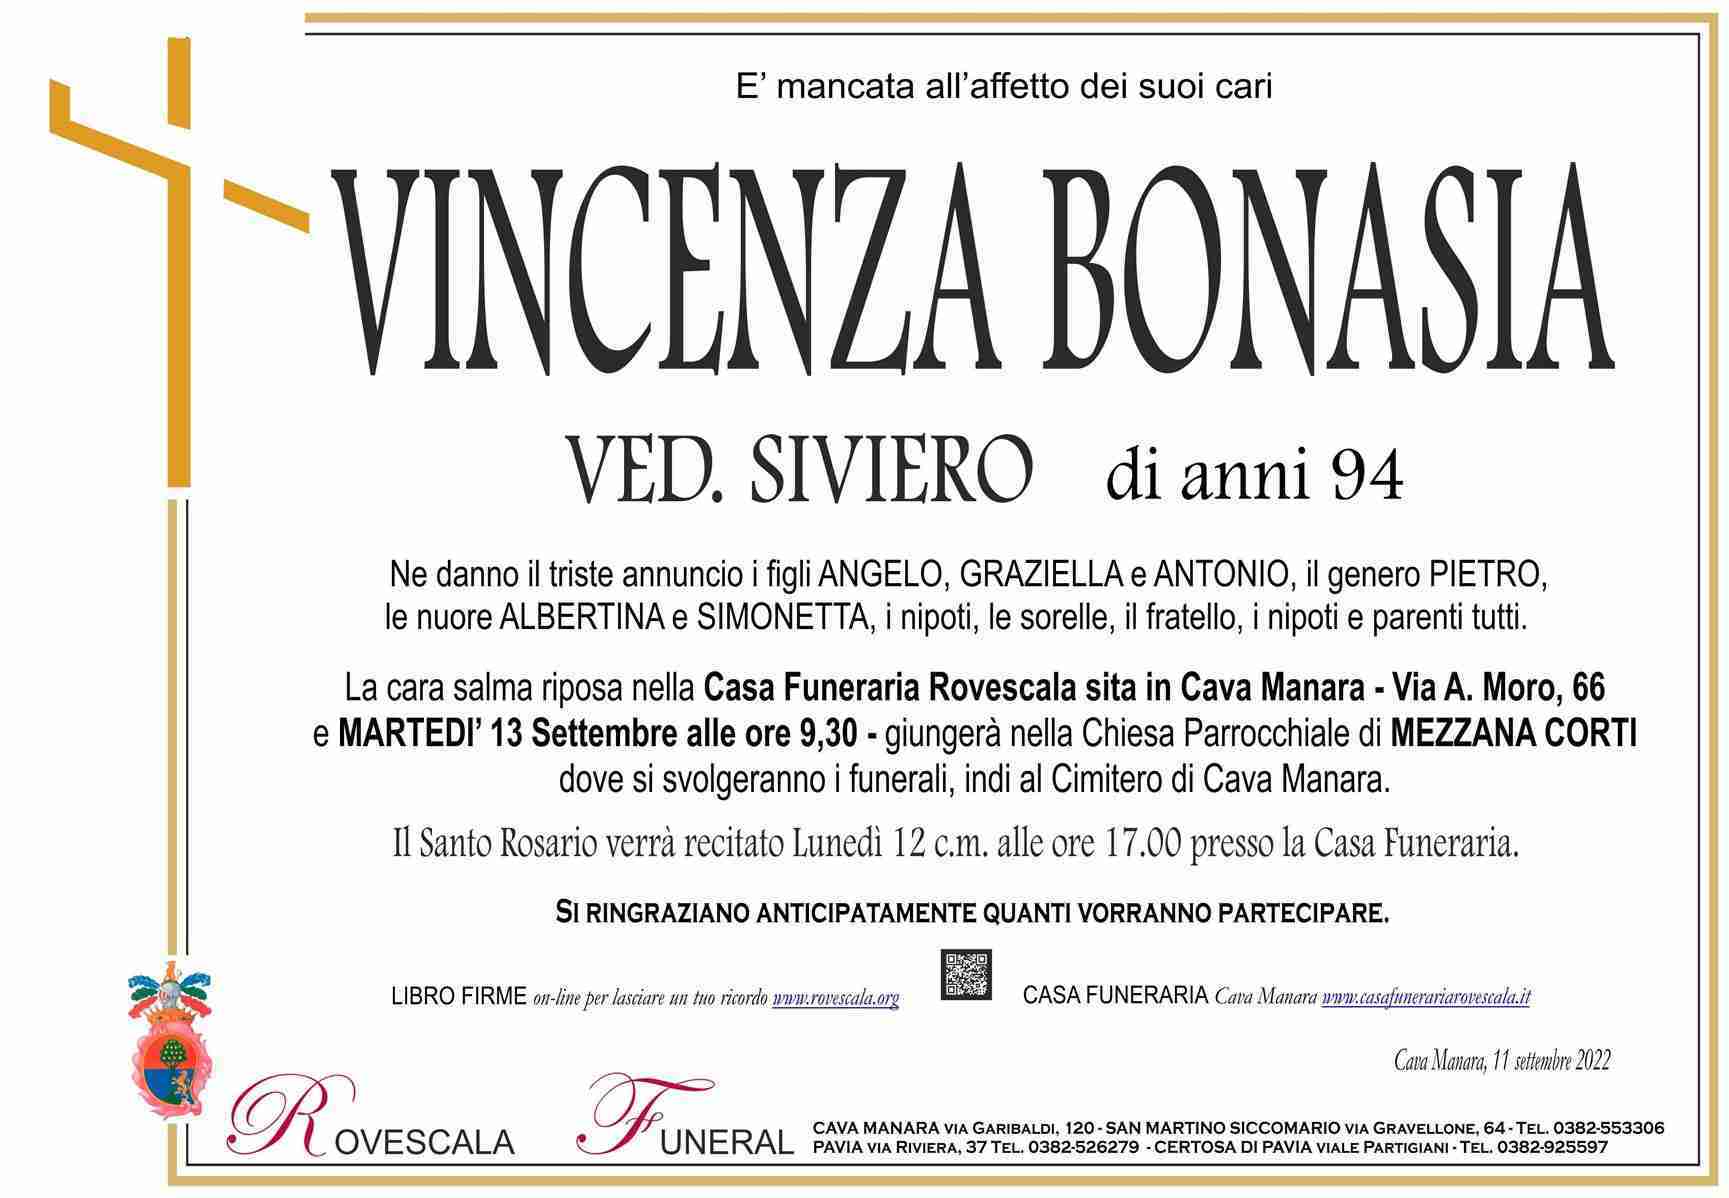 Vincenza Bonasia